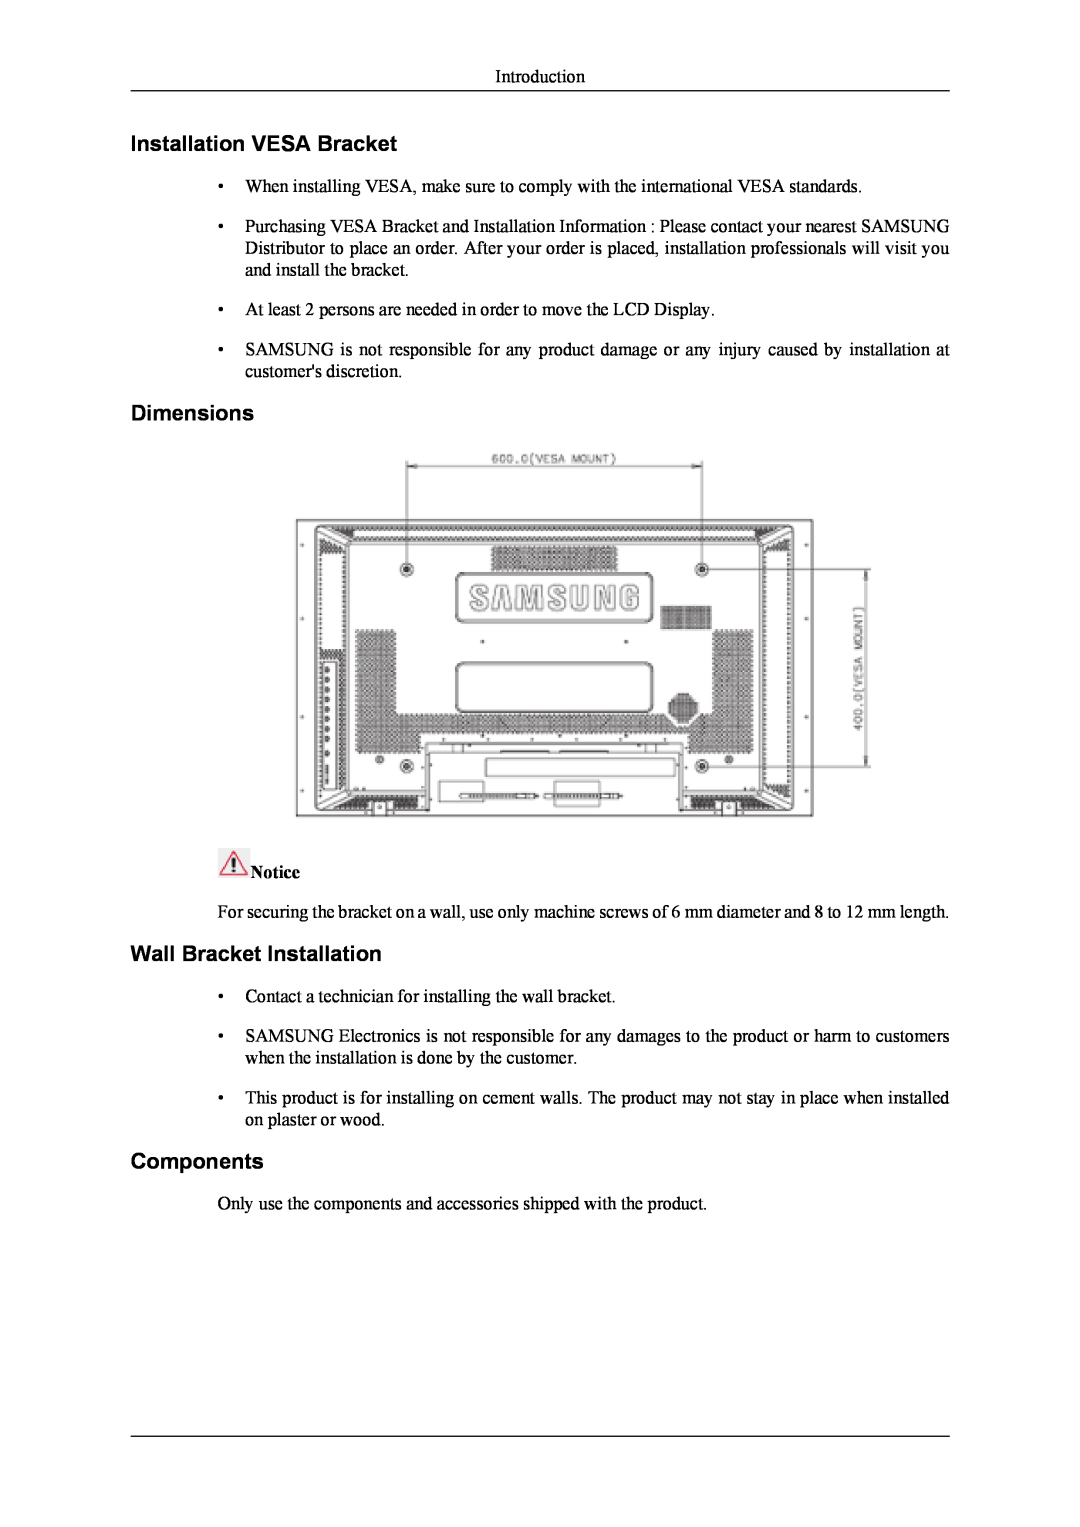 Samsung 400UXn user manual Installation VESA Bracket, Dimensions, Wall Bracket Installation, Components 